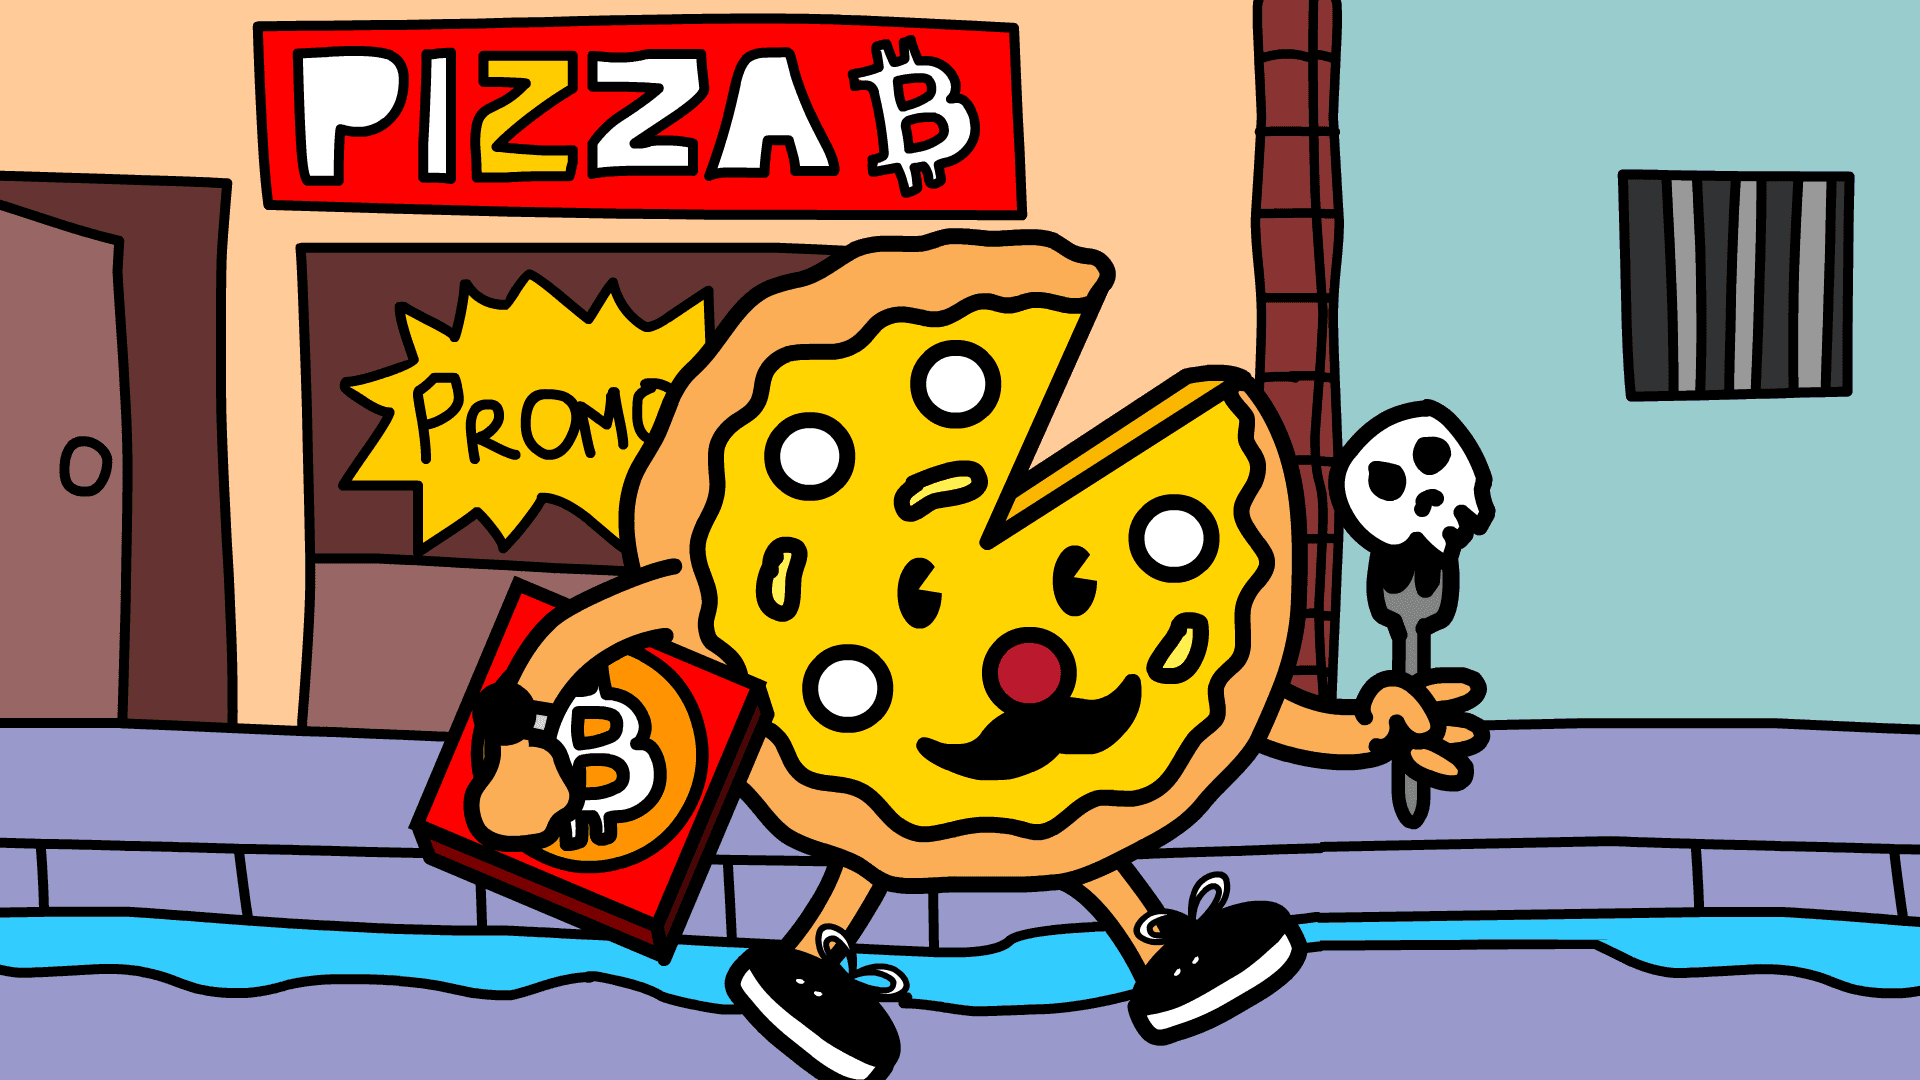 BITCOIN PIZZA - CHEESE